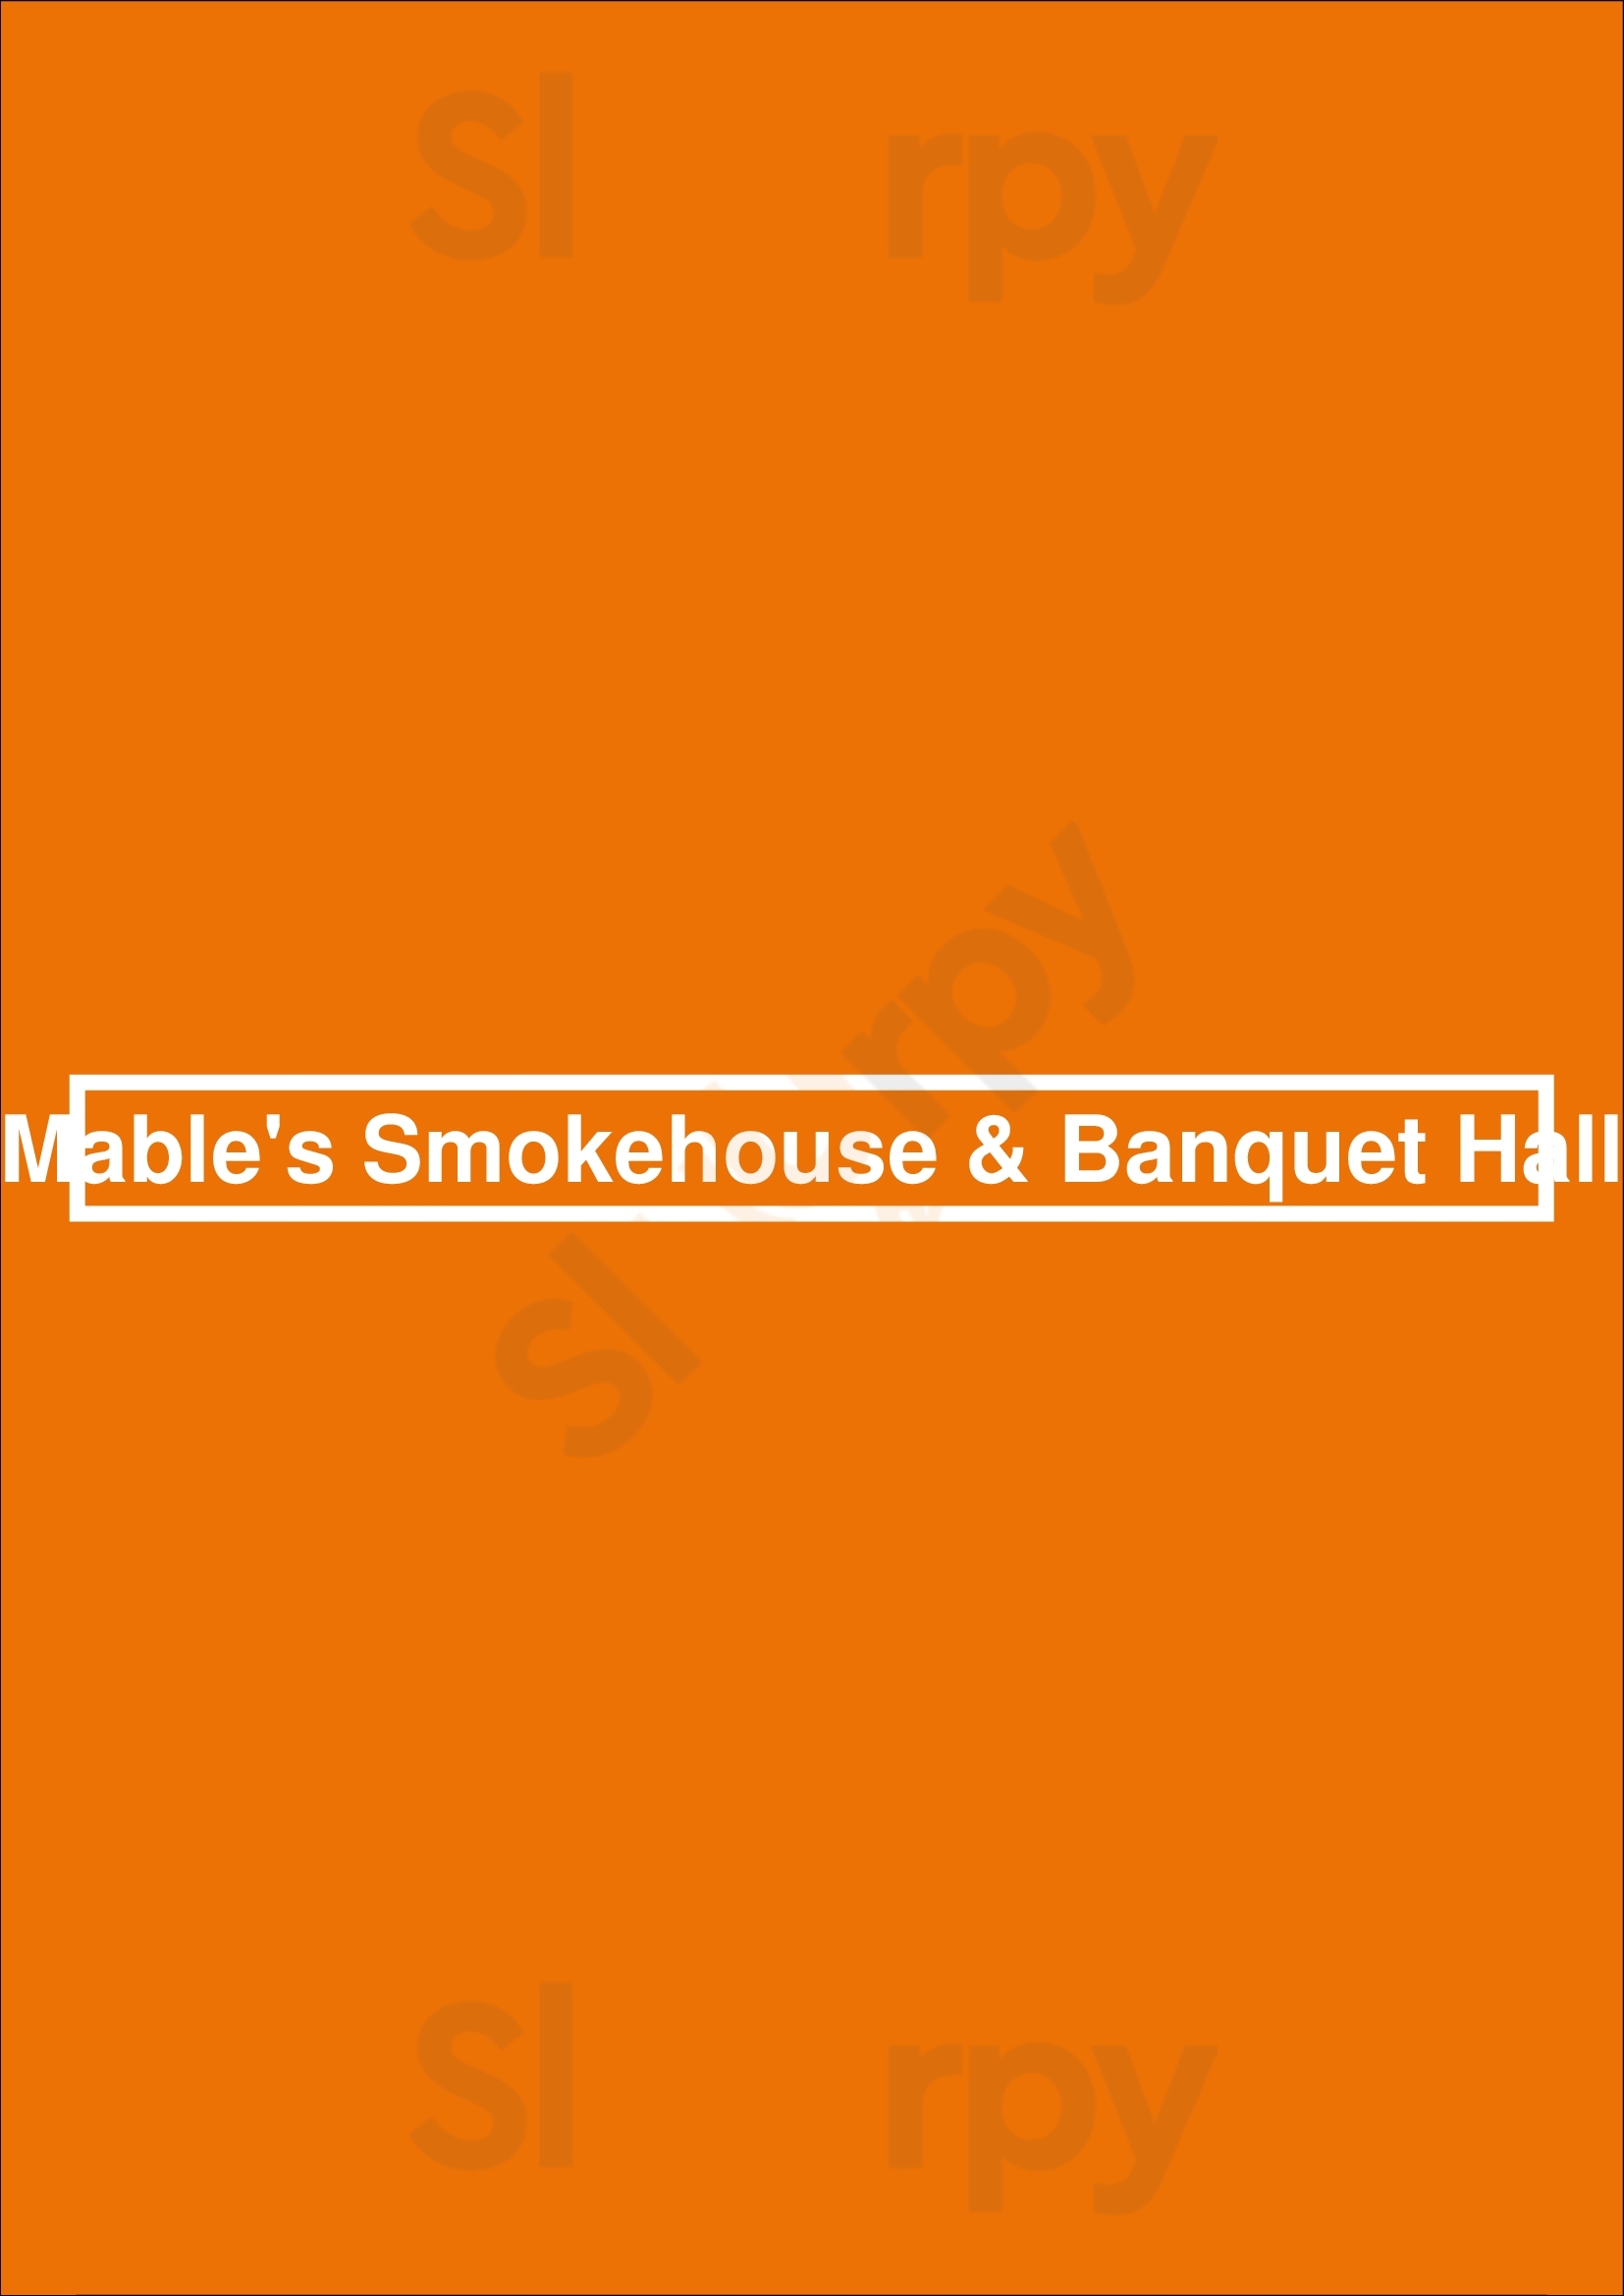 Mable's Smokehouse & Banquet Hall Brooklyn Menu - 1